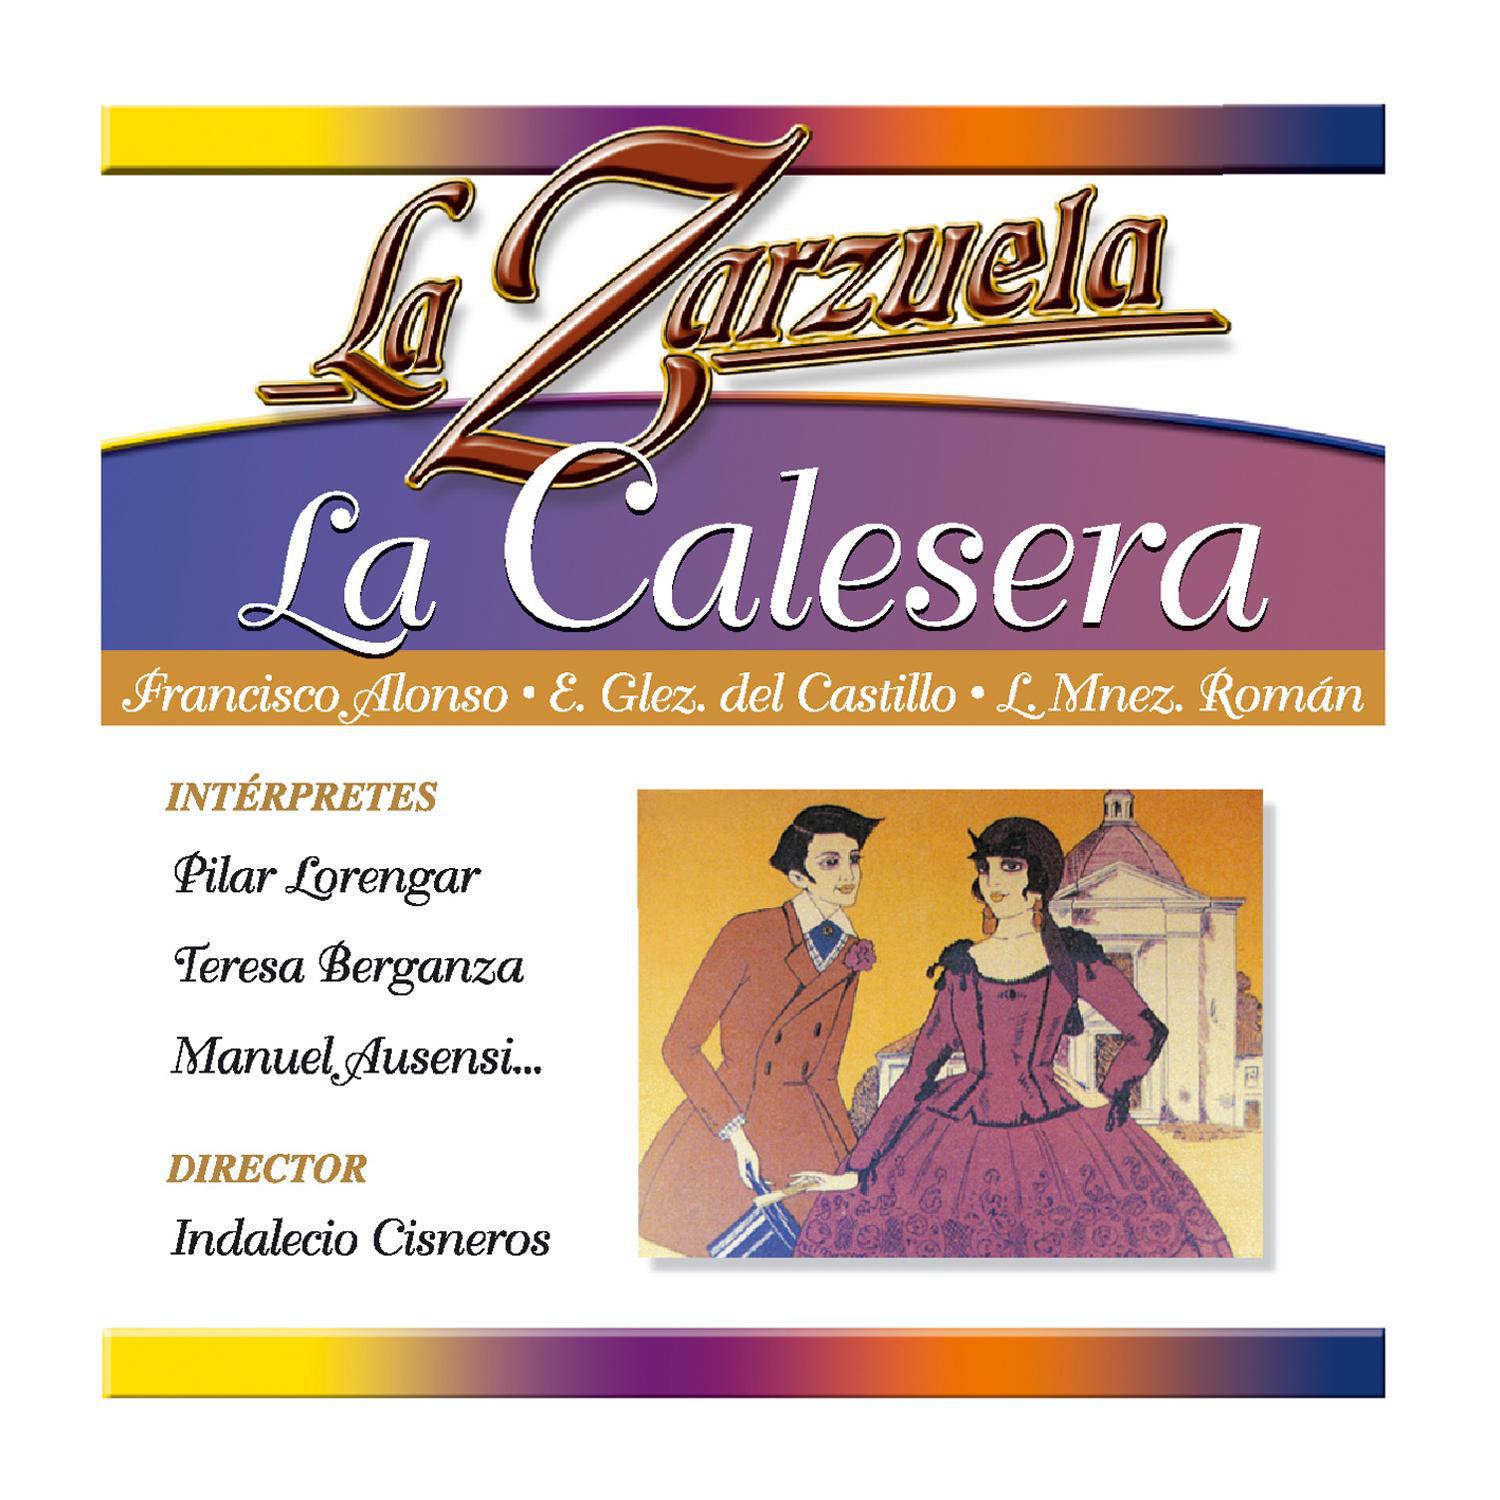 La Zarzuela: La Calesera